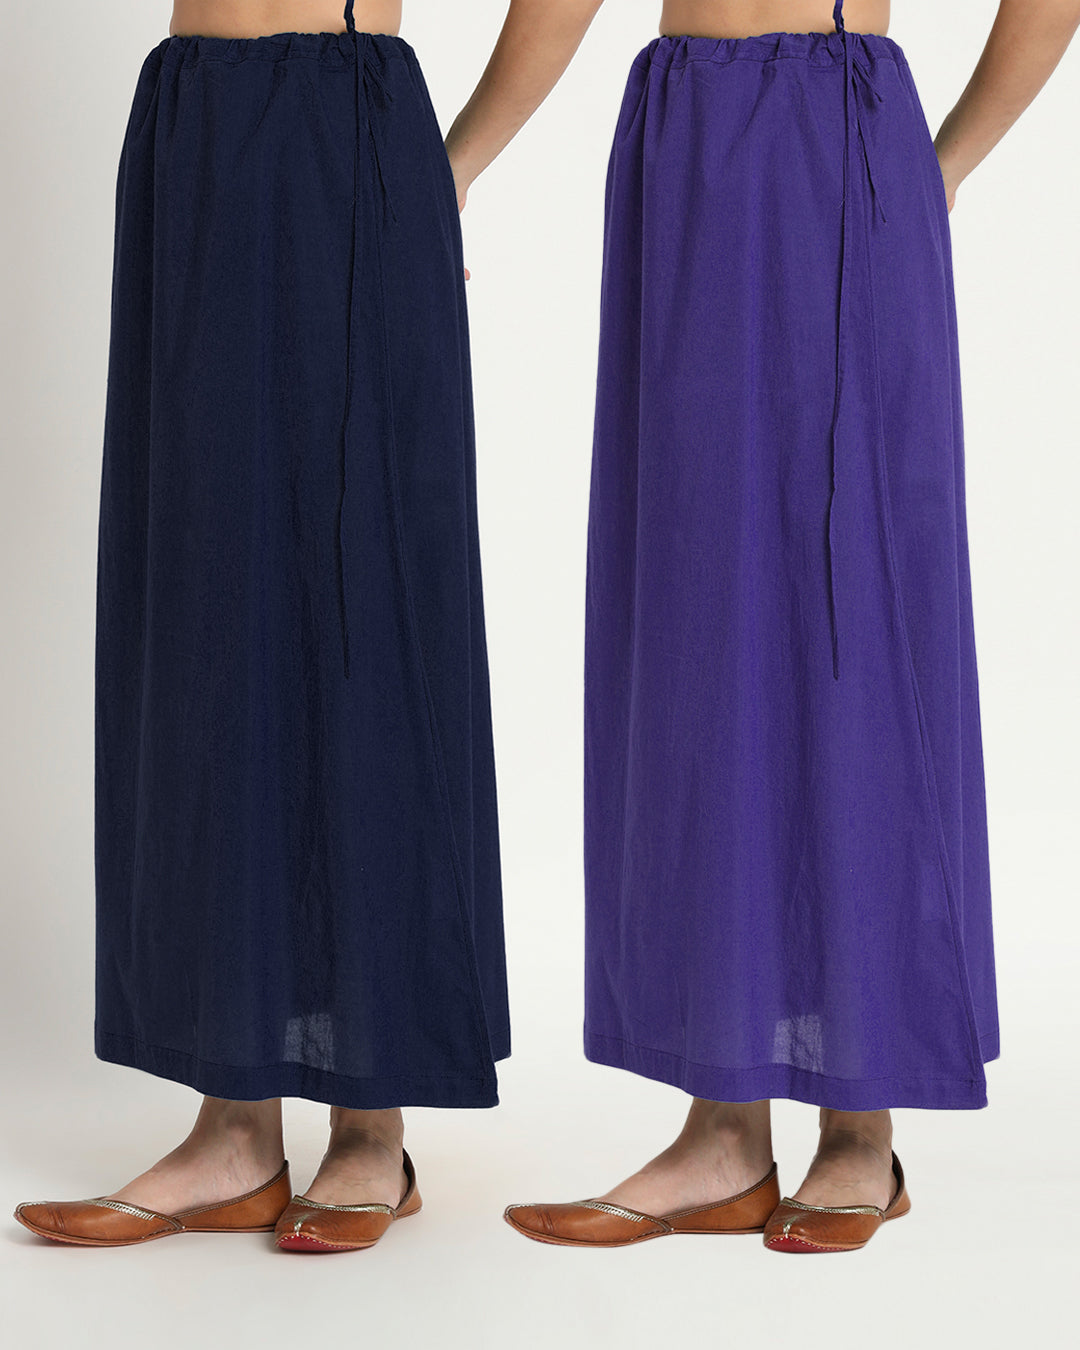 Combo: Midnight Blue & Aurora Purple Peekaboo Petticoat- Set of 2